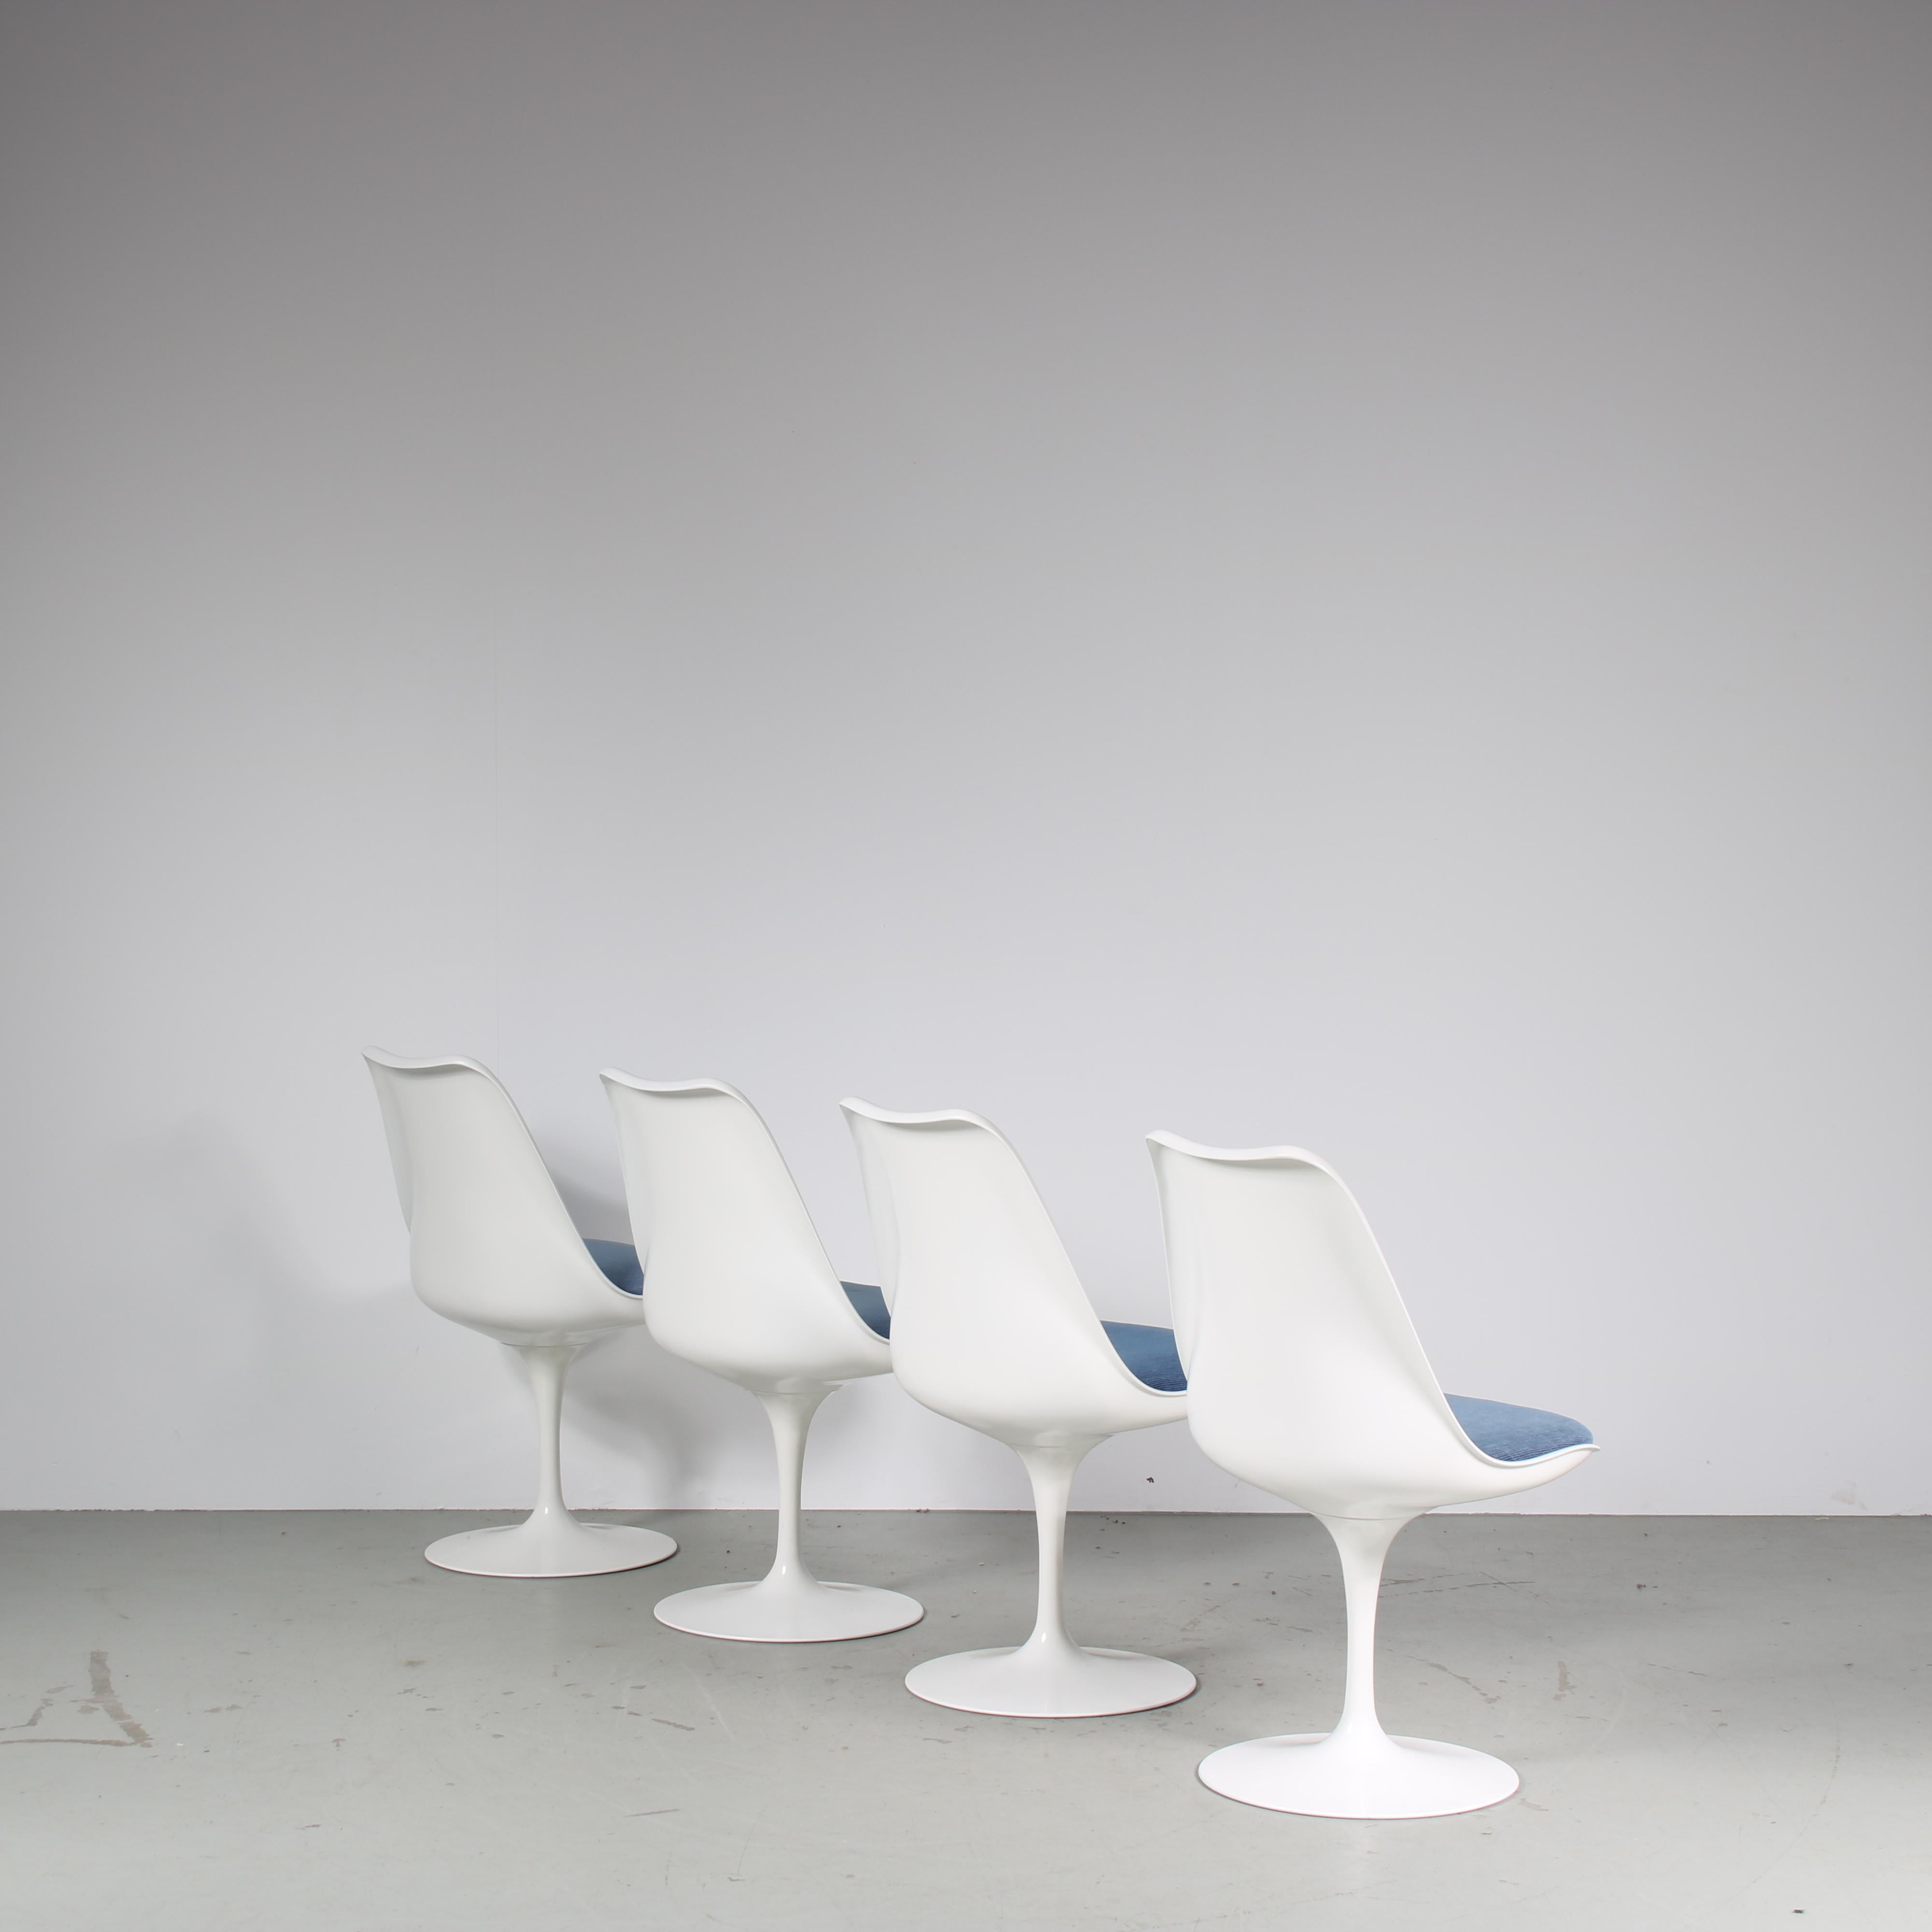 Mid-20th Century “Tulip” Chairs by Eero Saarinen for Knoll International, USA 1960